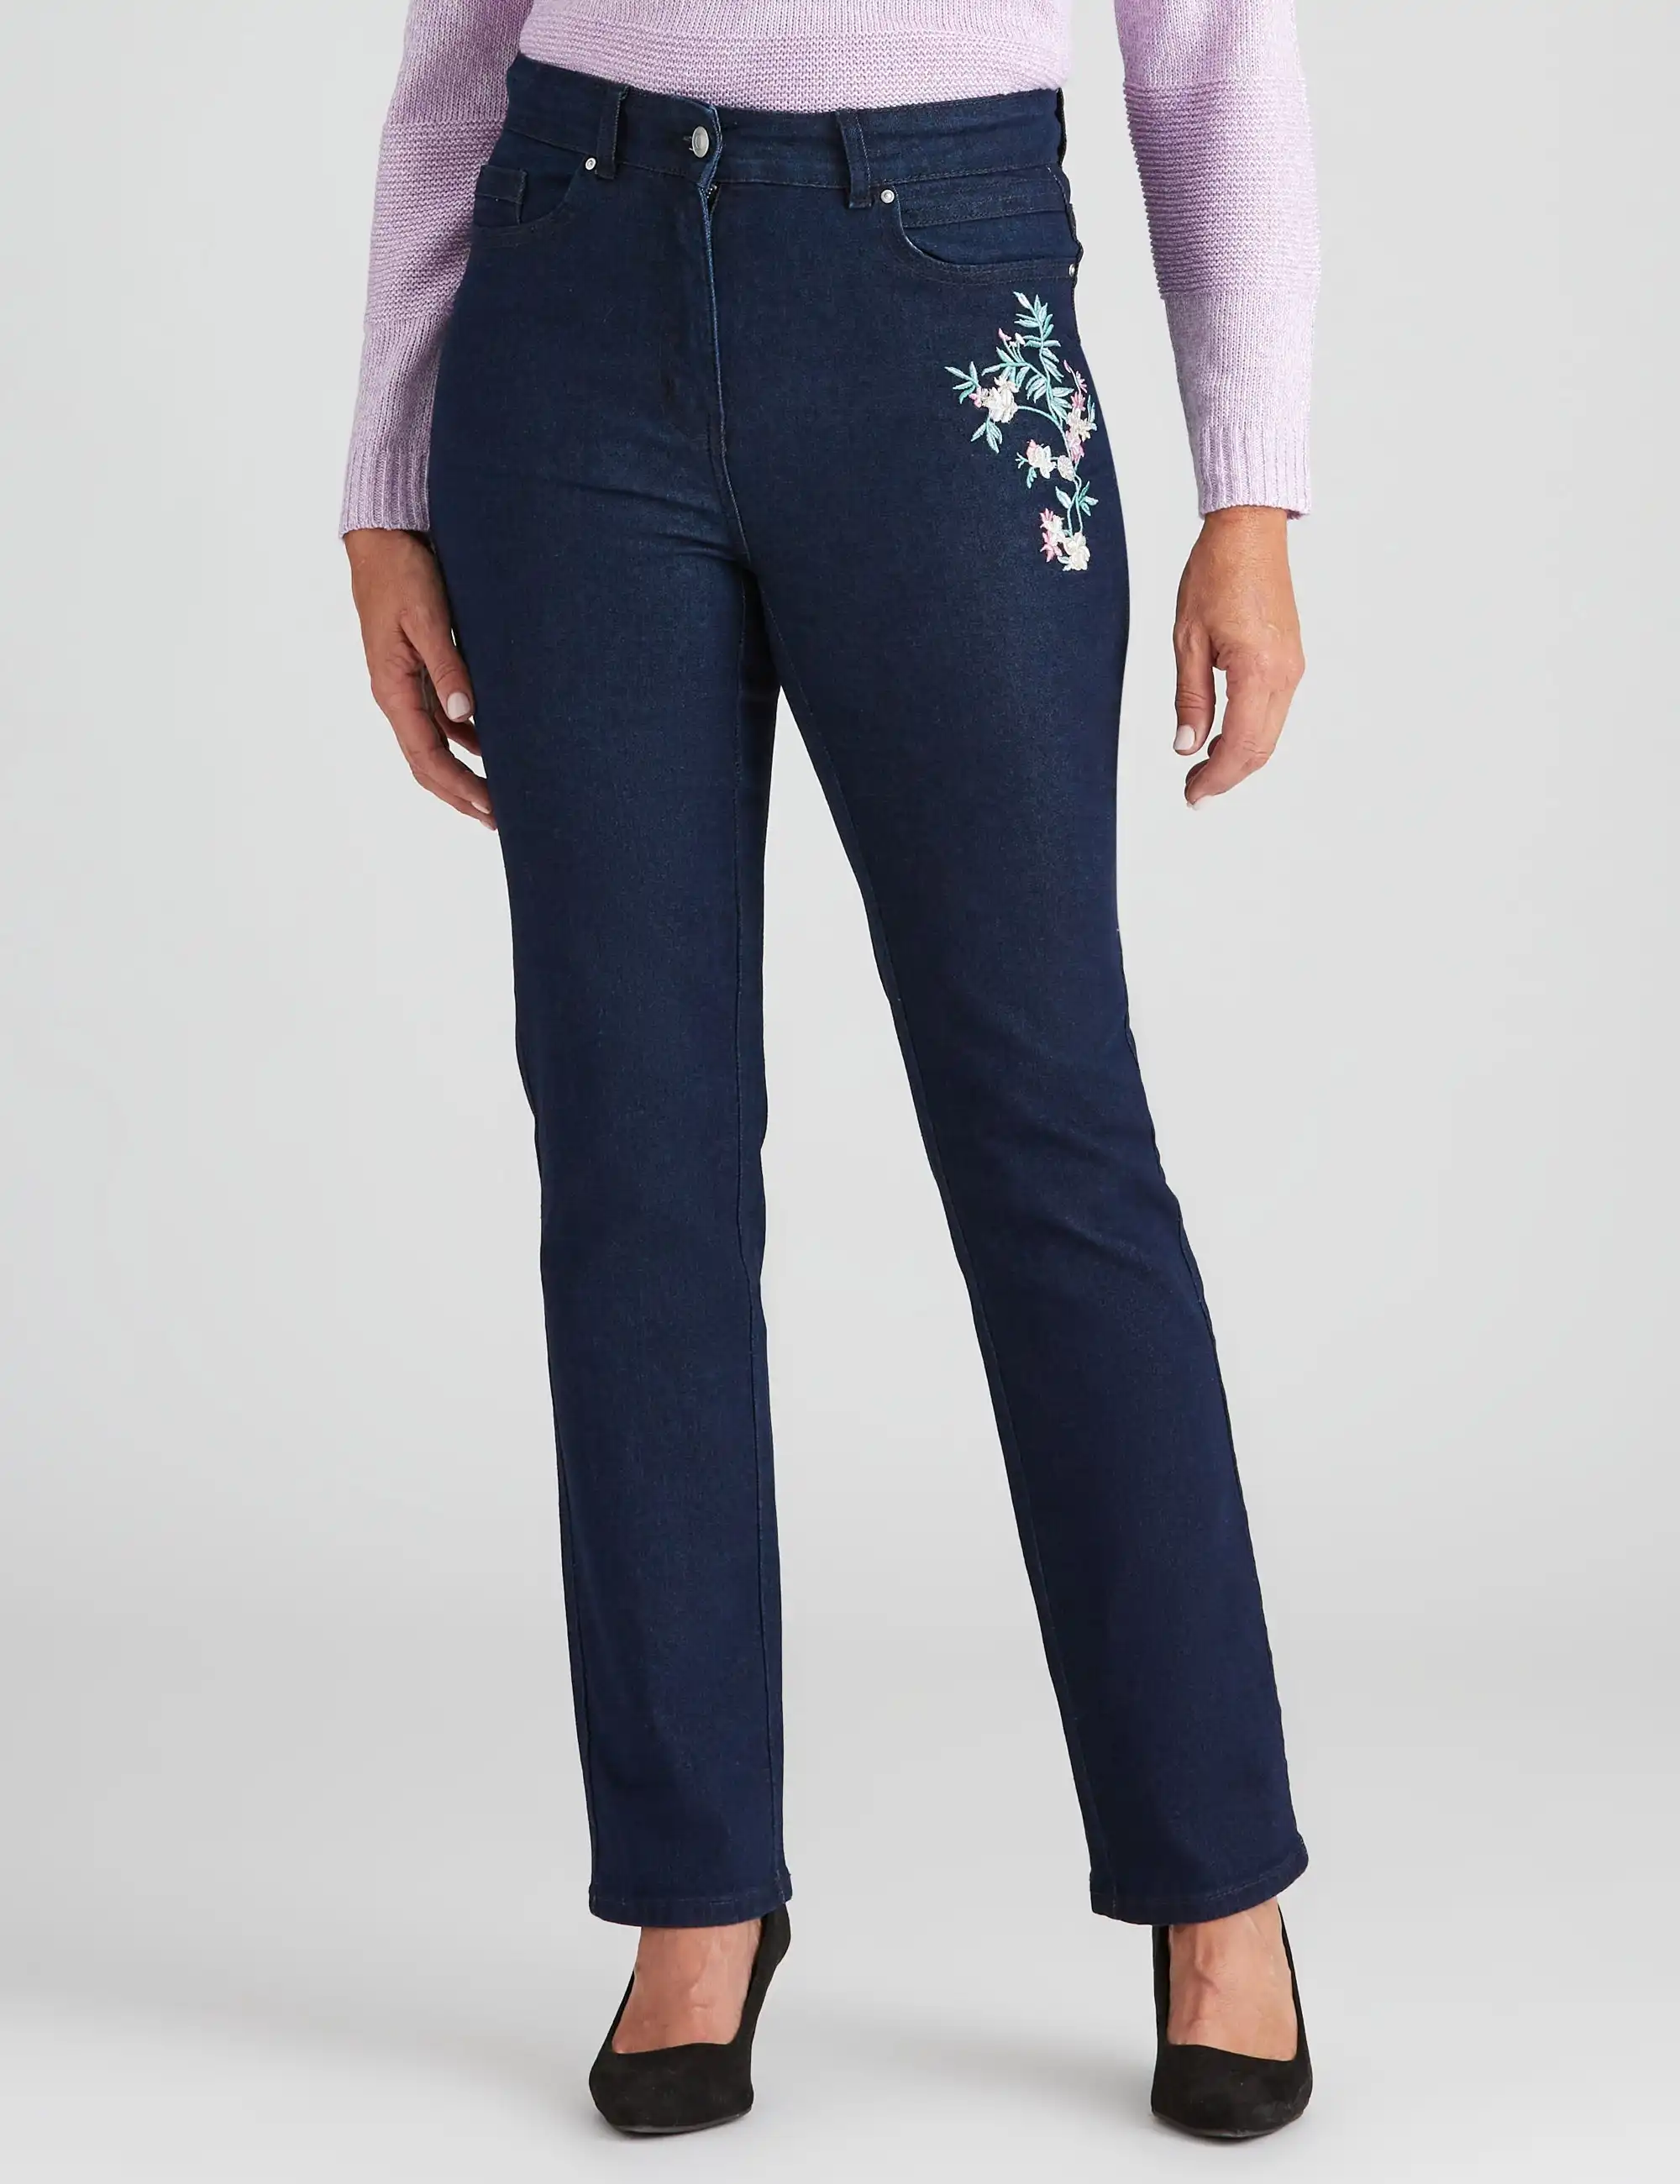 Millers Full Lenght 5 Pocket Jeans